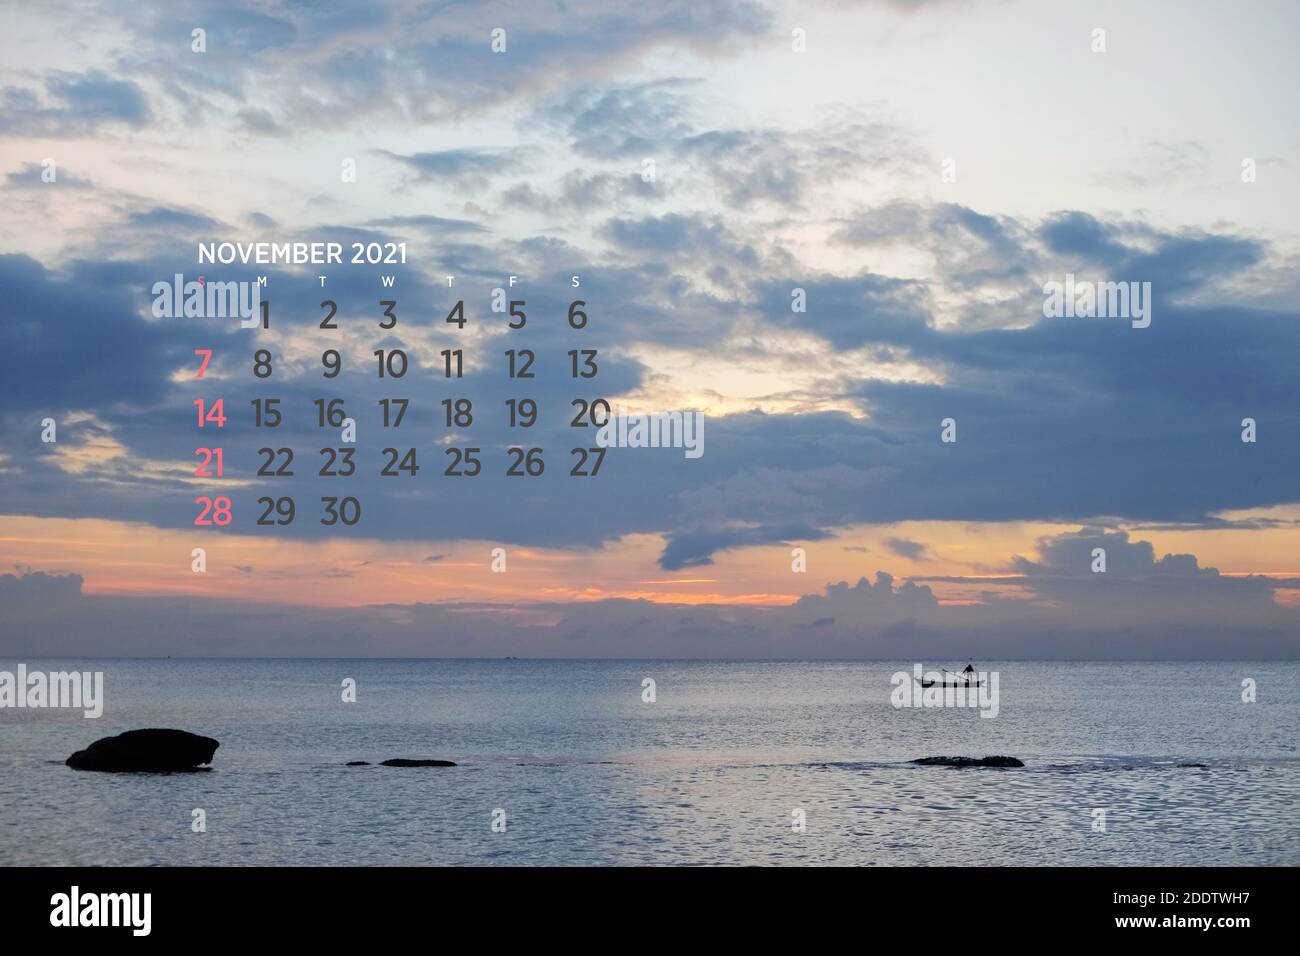 Calendar November 2021. Sea, ocean, beach, tropical, nature theme. A2. 60 x 40 cm. 15.75 x 23.62 inches Stock Photo